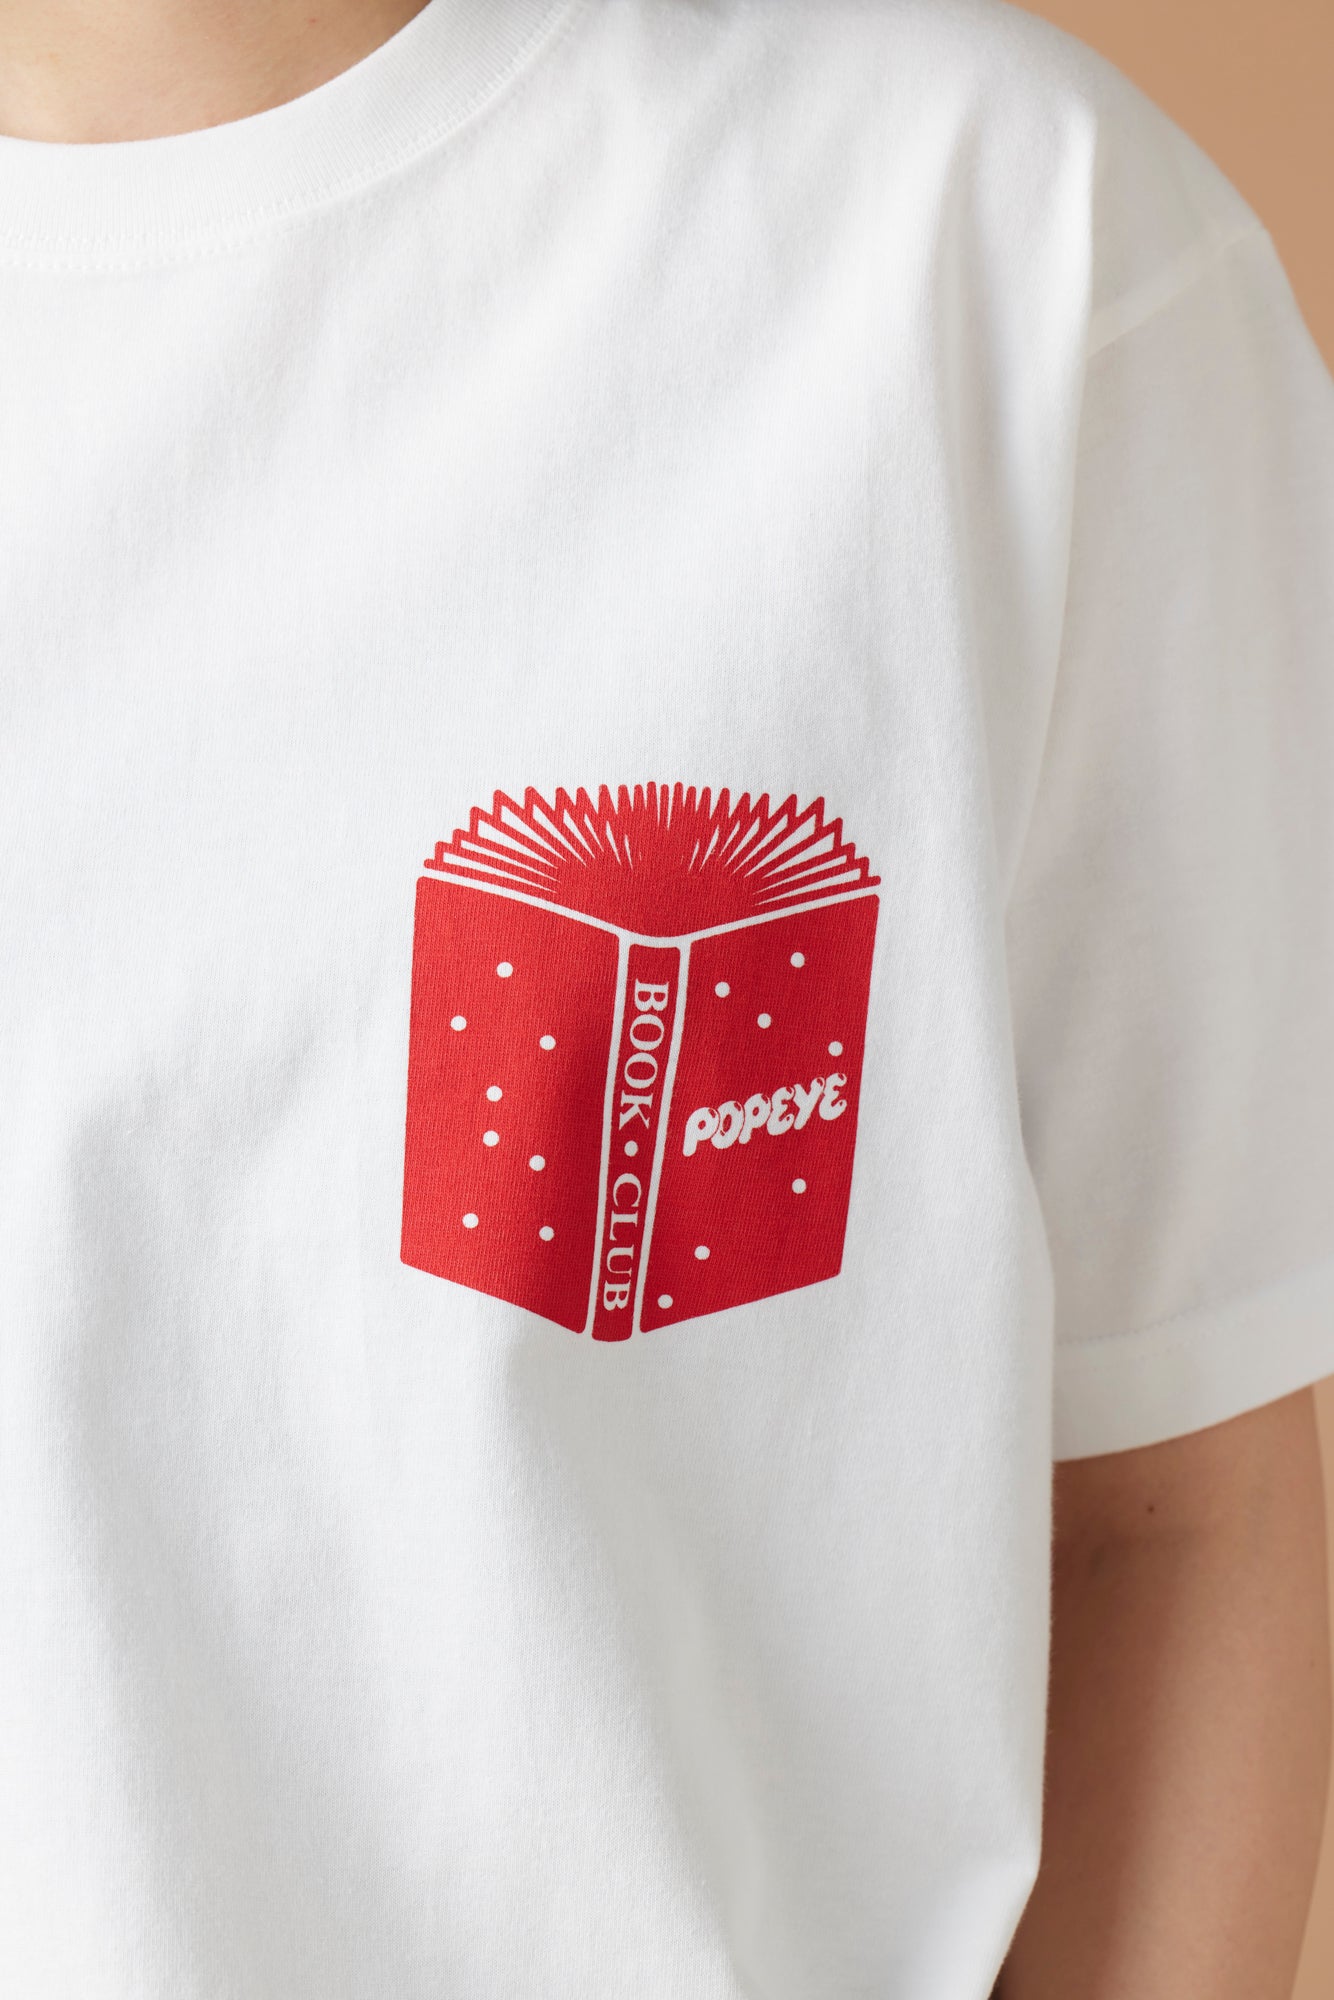 POPEYE BOOK CLUB Book T-Shirt / White - Red